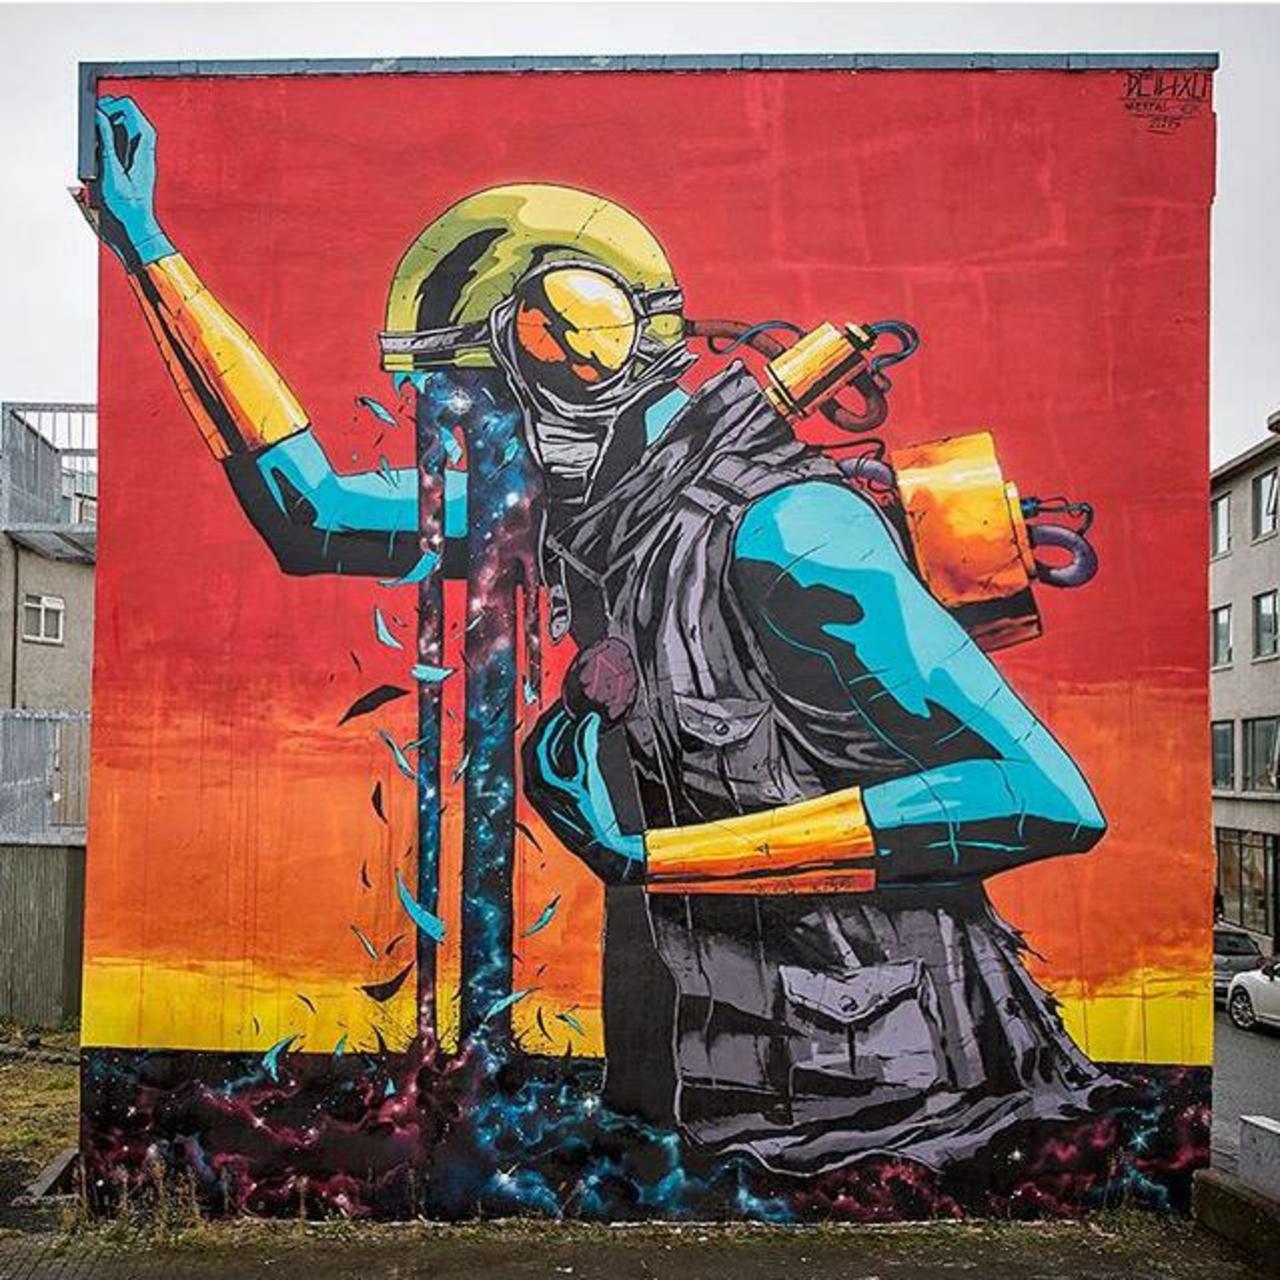 RT @GoogleStreetArt: Street Art by Deih in Reykjavik 

#art #graffiti #mural #streetart https://t.co/6Aa63zHcVG